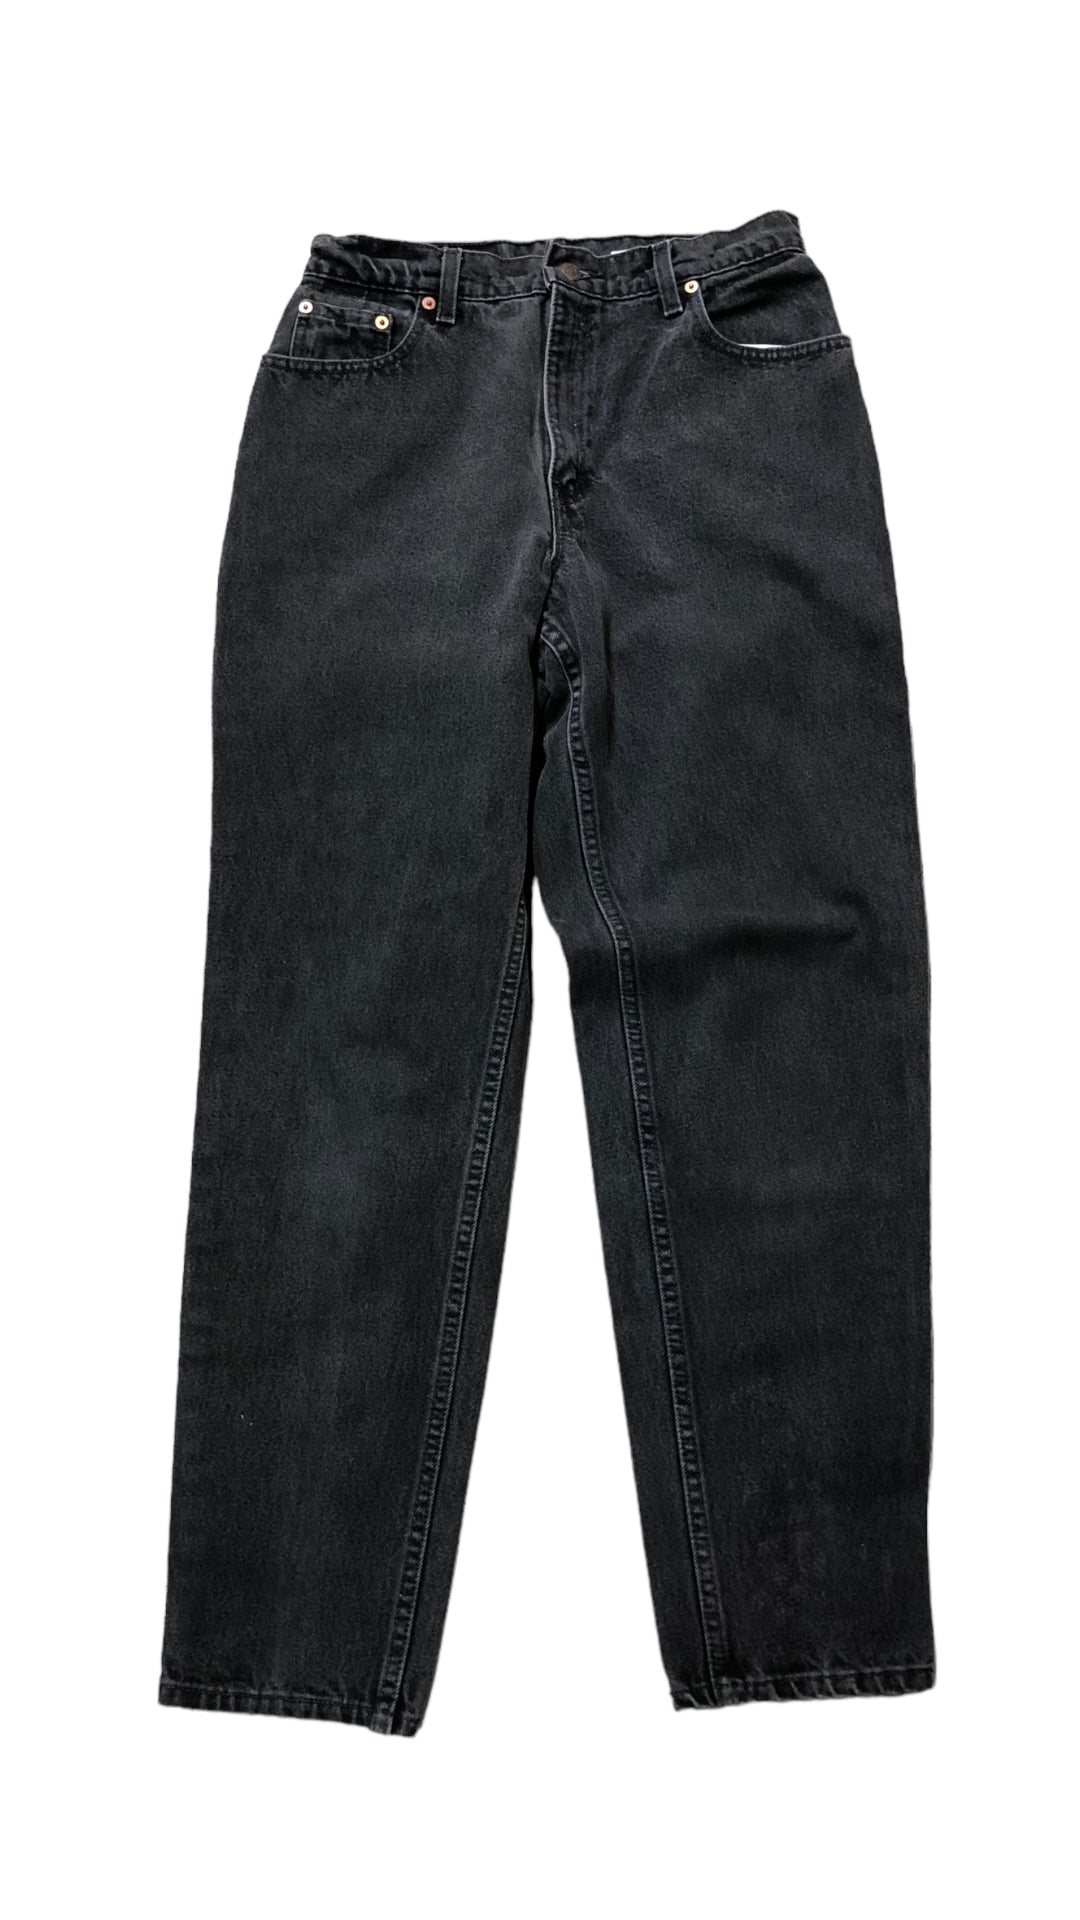 VTG Wmn's Levi's 551 Black Denim Jeans Sz 29x29